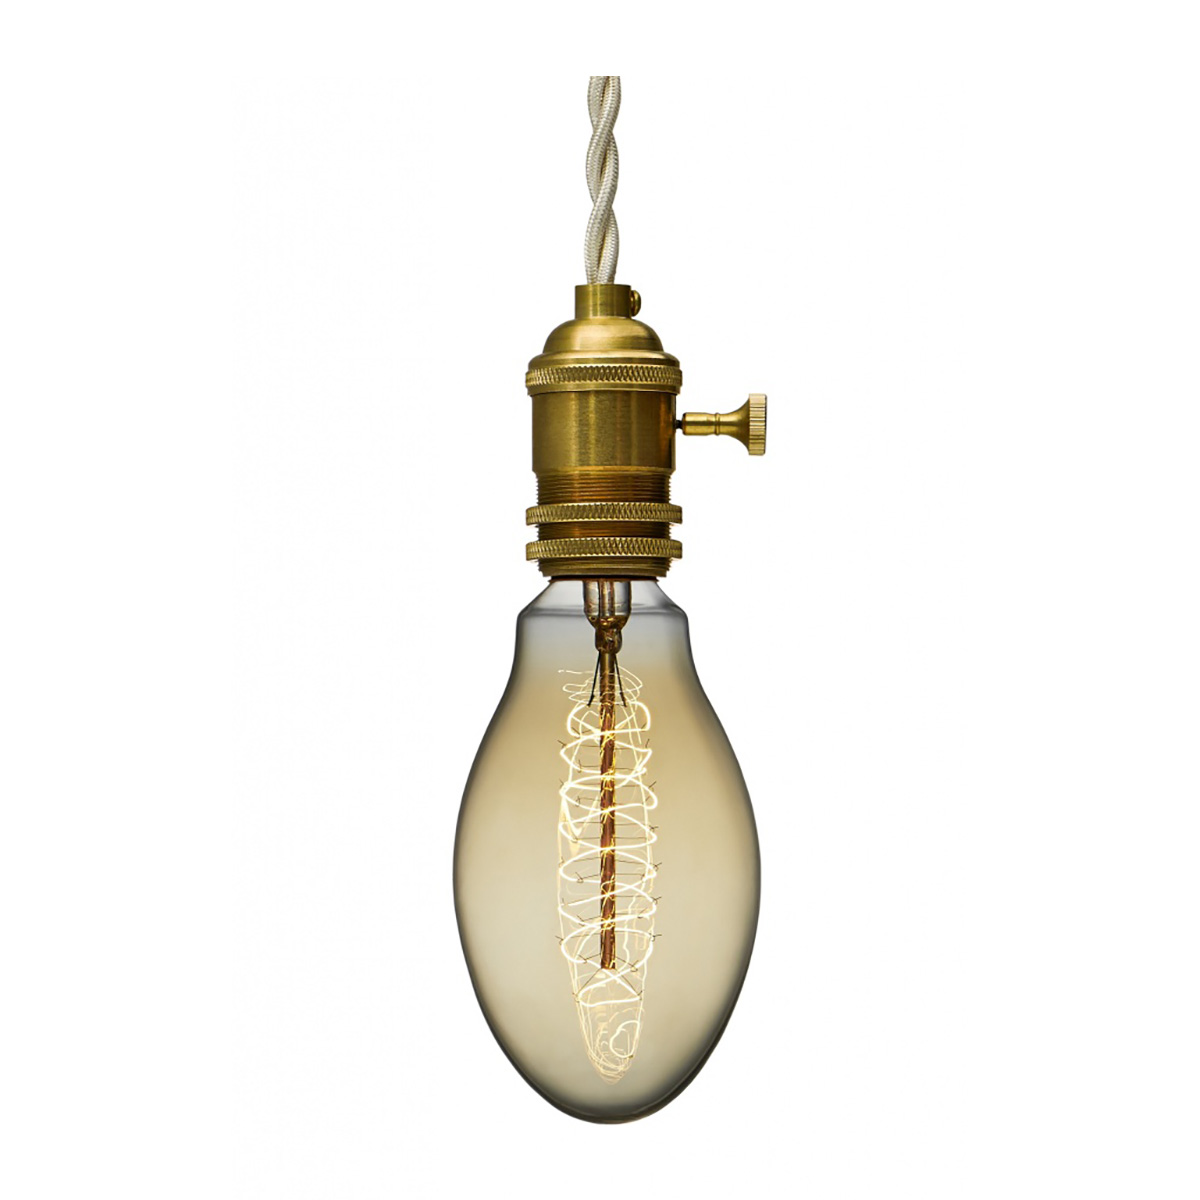 Лампа Estelia Alhambra Golden E27 60W. Бренд: Iteria. Лампы